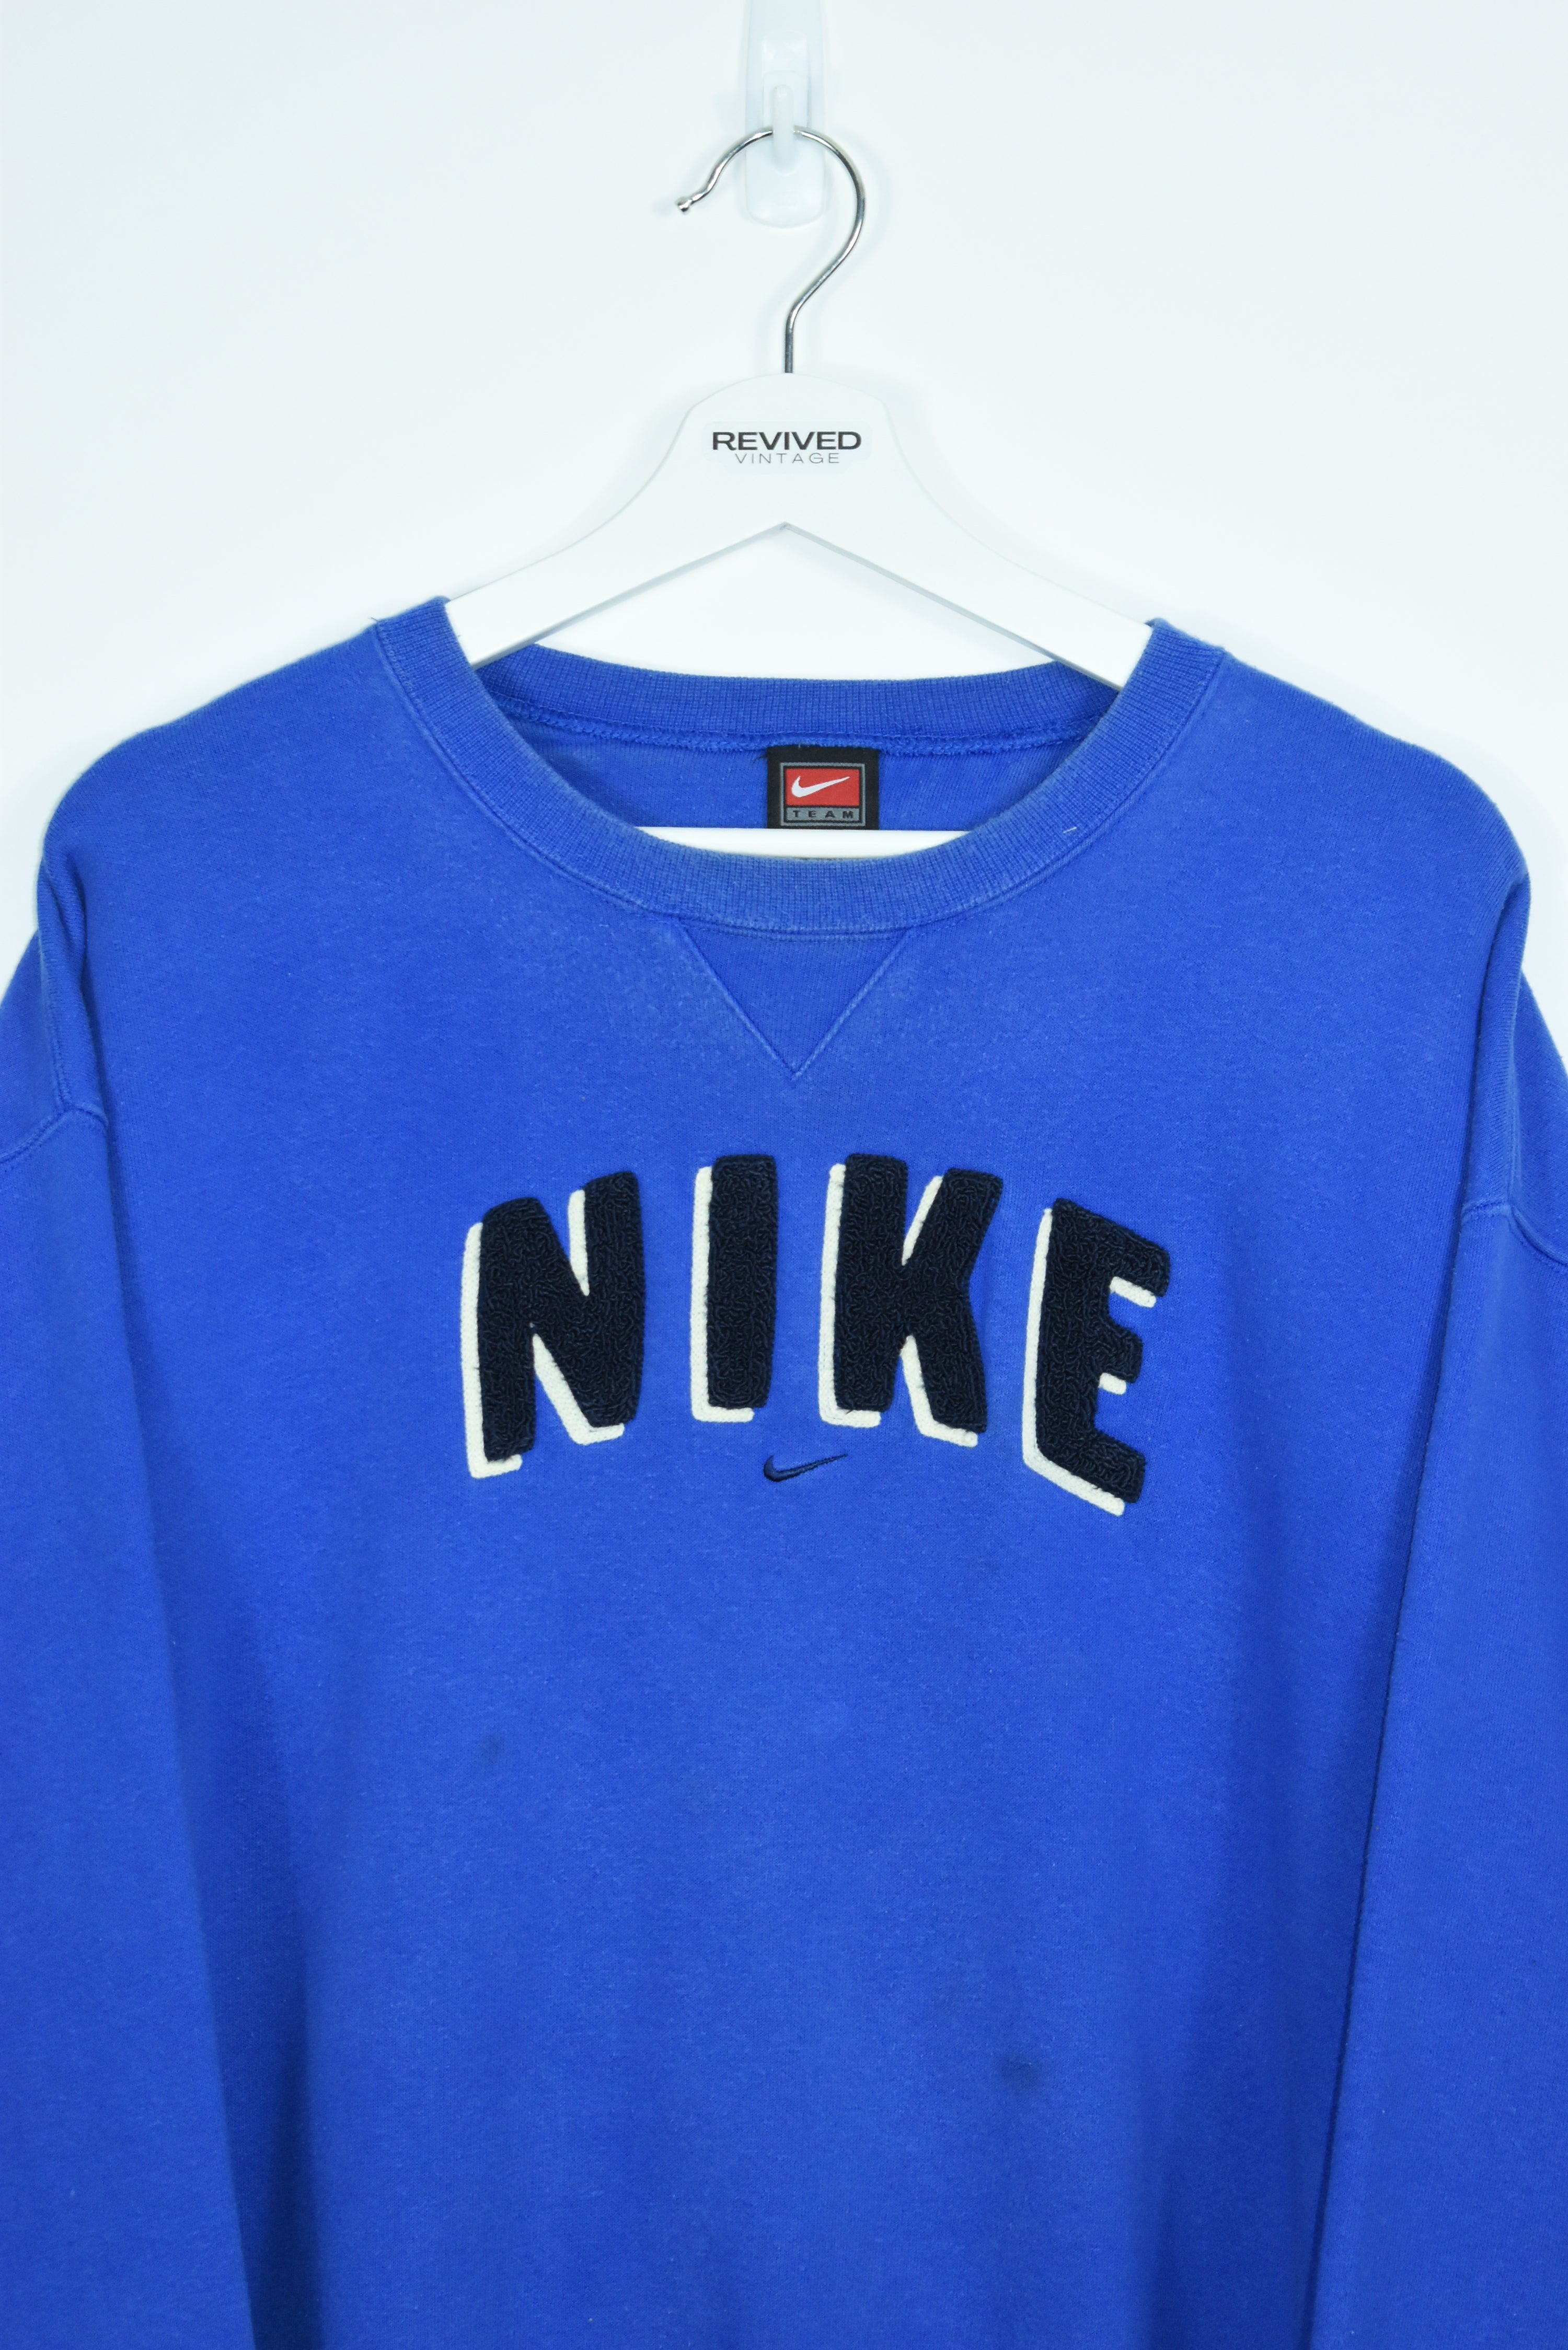 Vintage RARE Nike Puff Print Embridery Blue Sweatshirt XLARGE